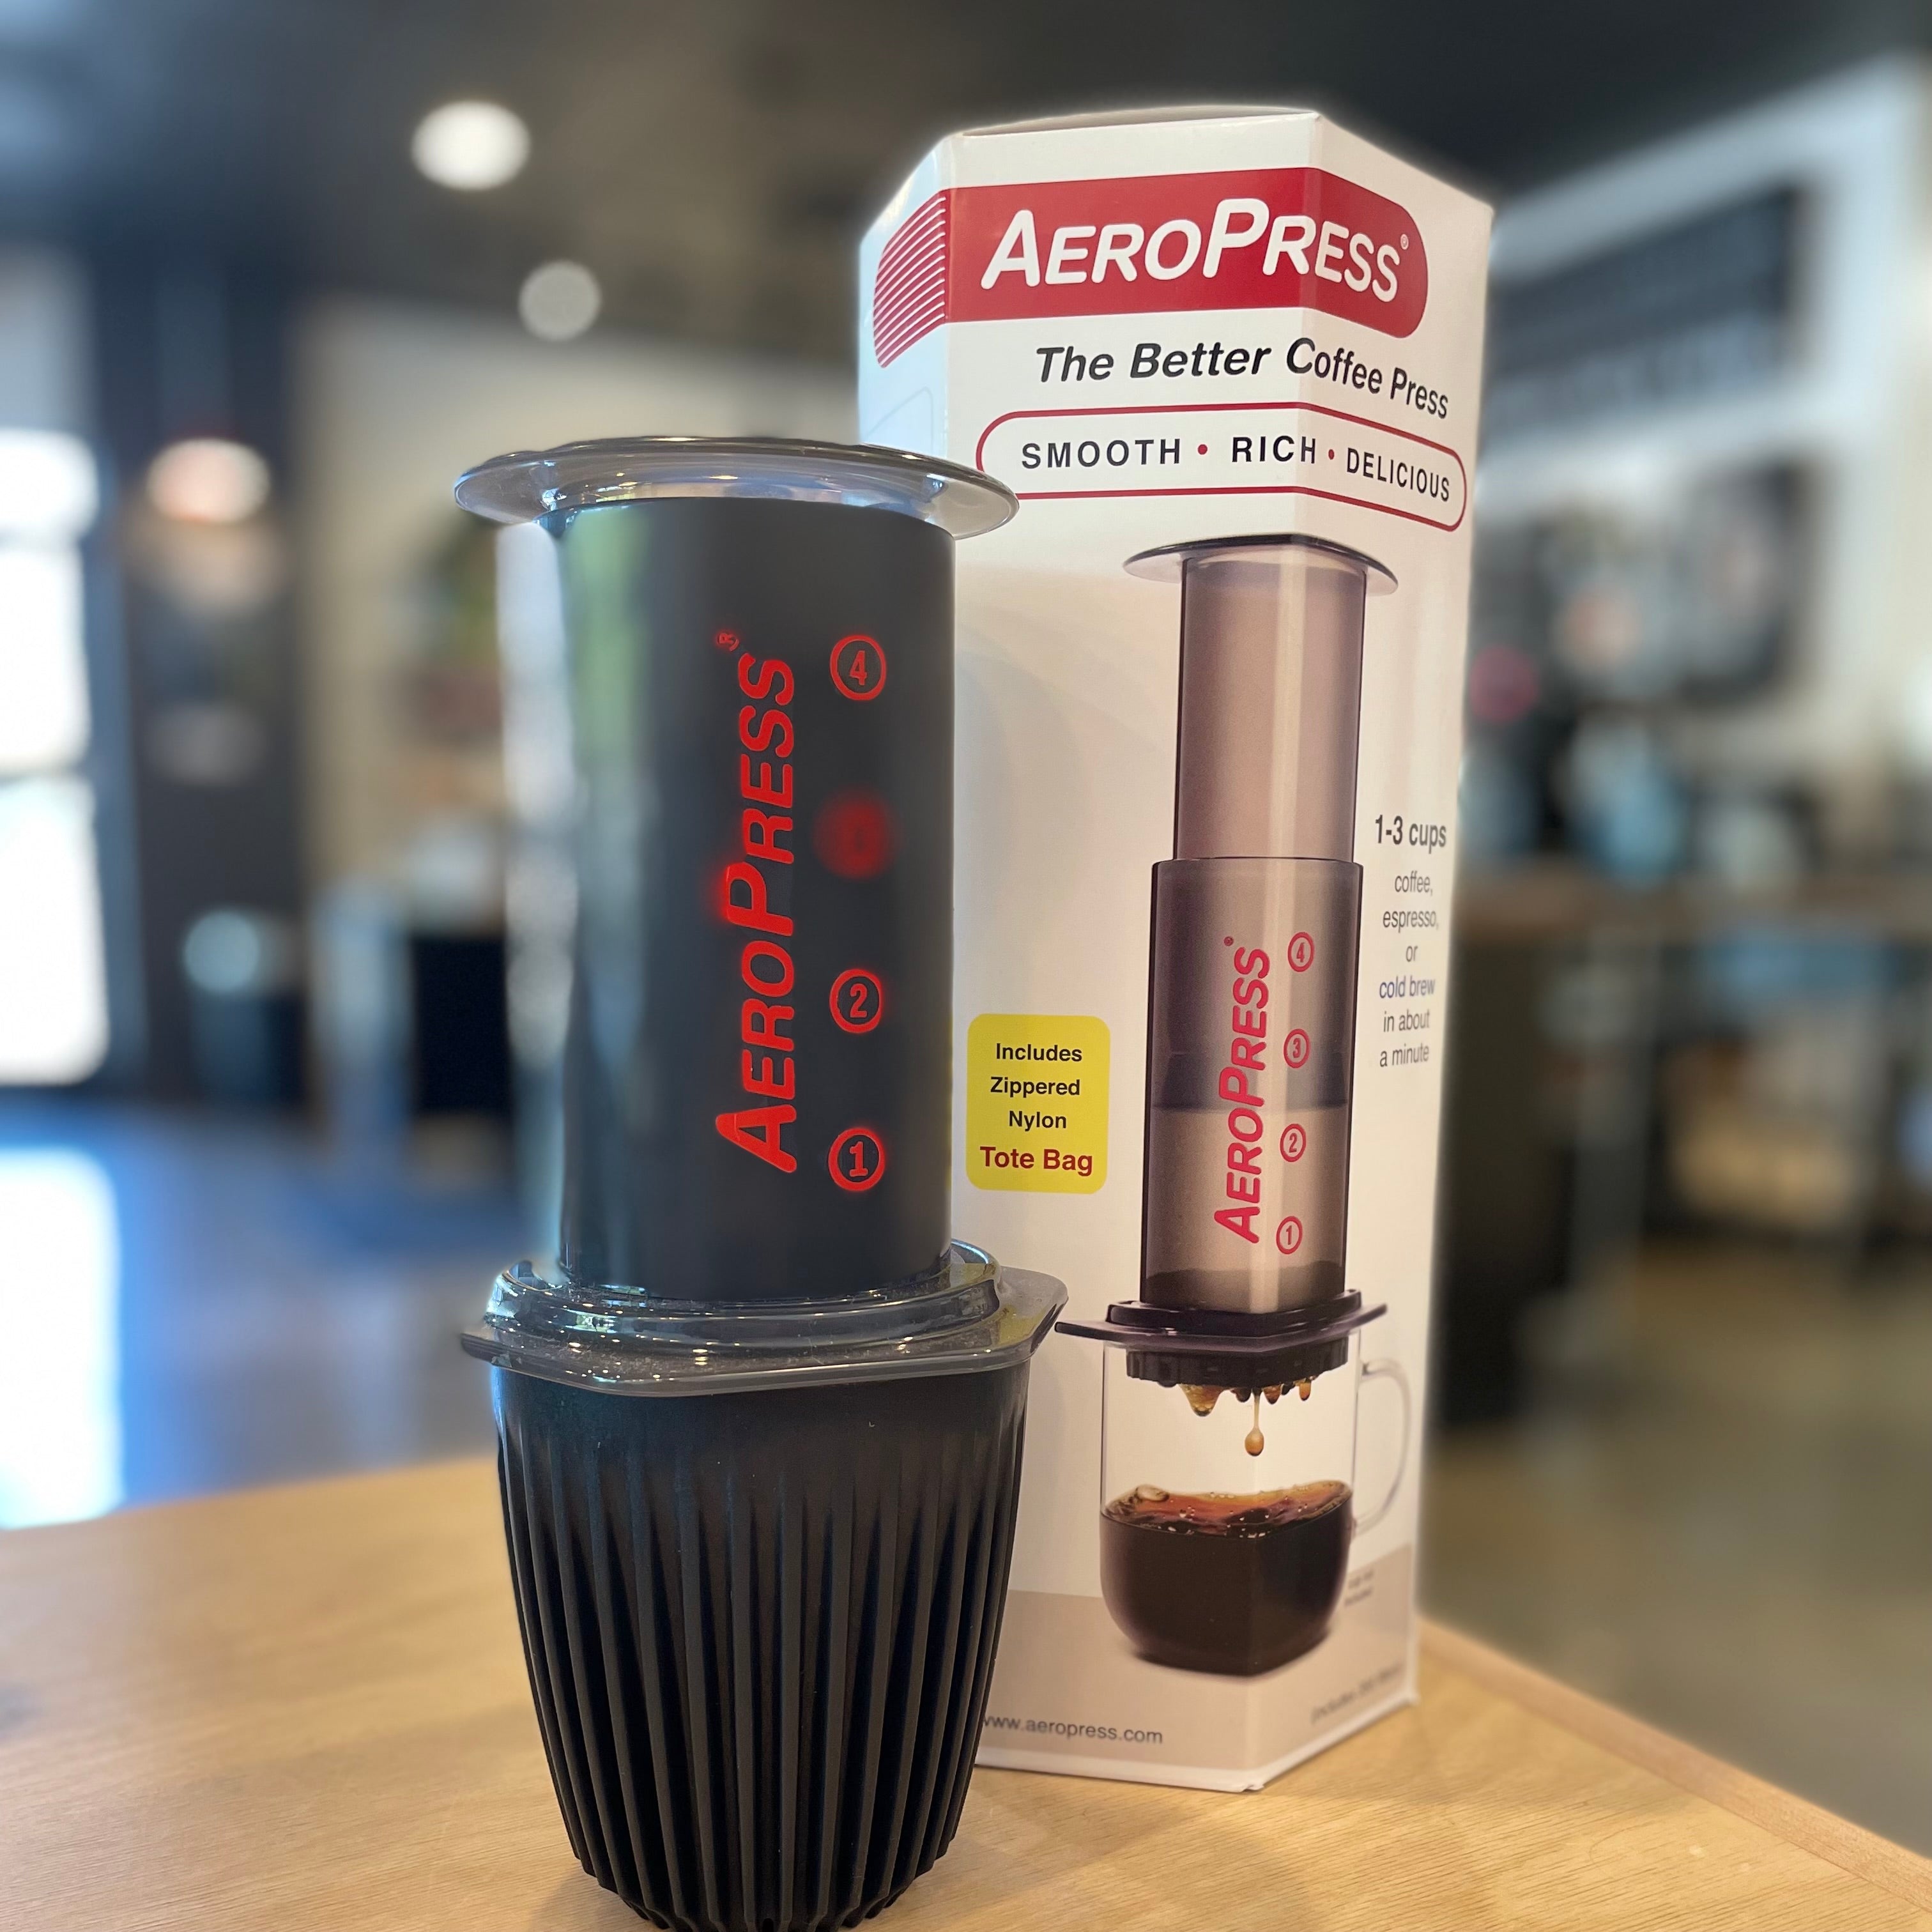 How to Make Aeropress Coffee